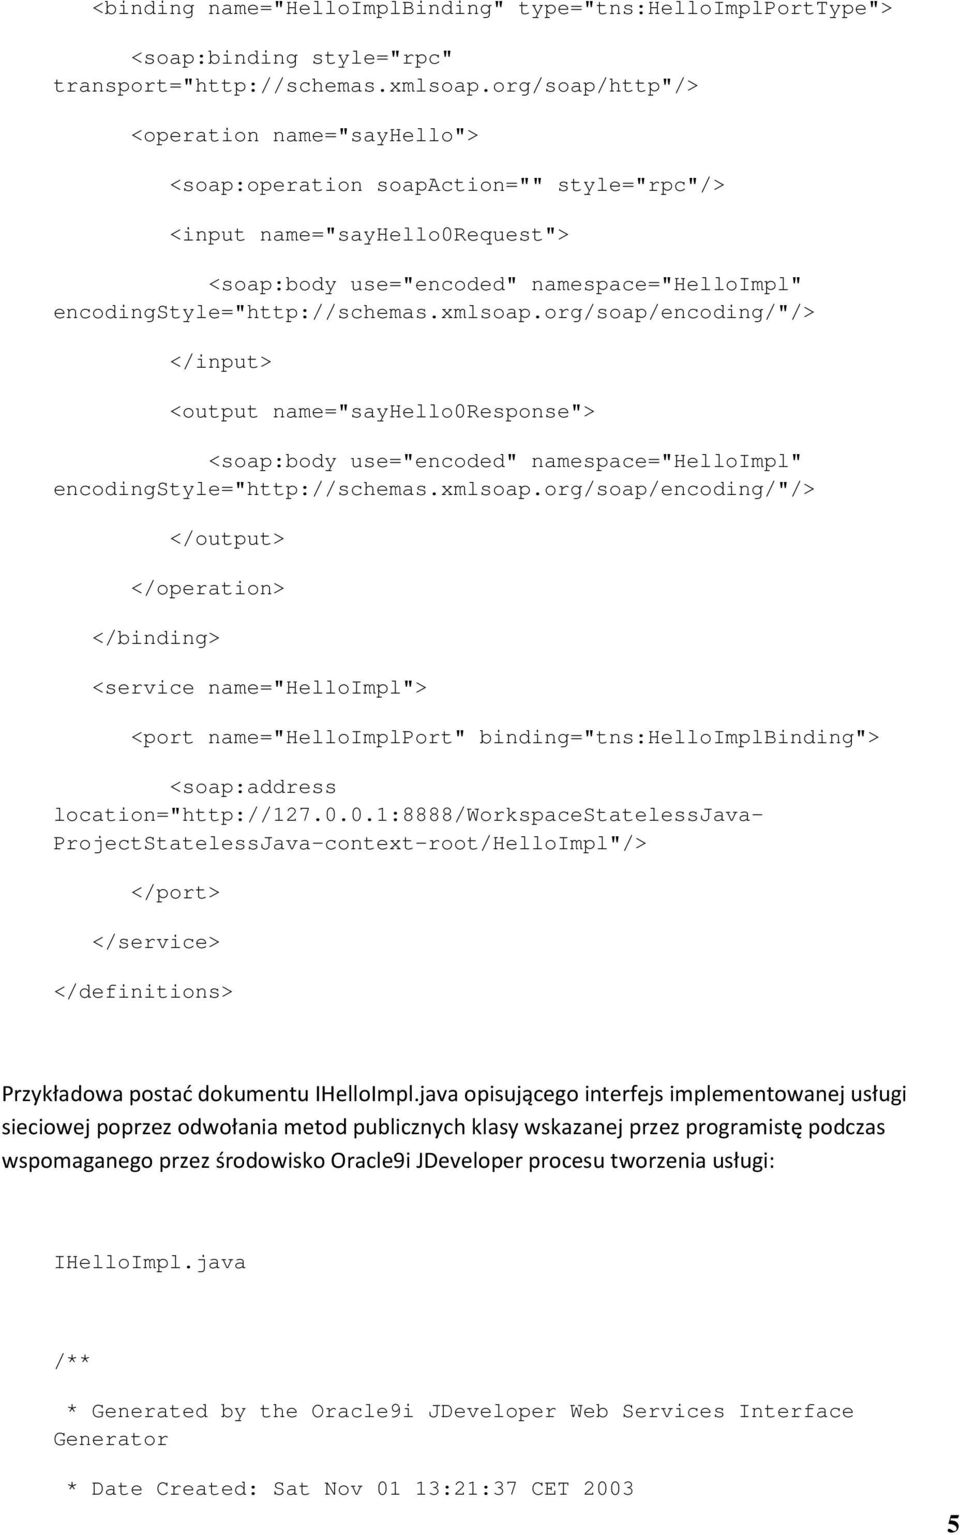 xmlsoap.org/soap/encoding/"/> </input> <output name="sayhello0response"> <soap:body use="encoded" namespace="helloimpl" encodingstyle="http://schemas.xmlsoap.org/soap/encoding/"/> </output> </operation> </binding> <service name="helloimpl"> <port name="helloimplport" binding="tns:helloimplbinding"> <soap:address location="http://127.